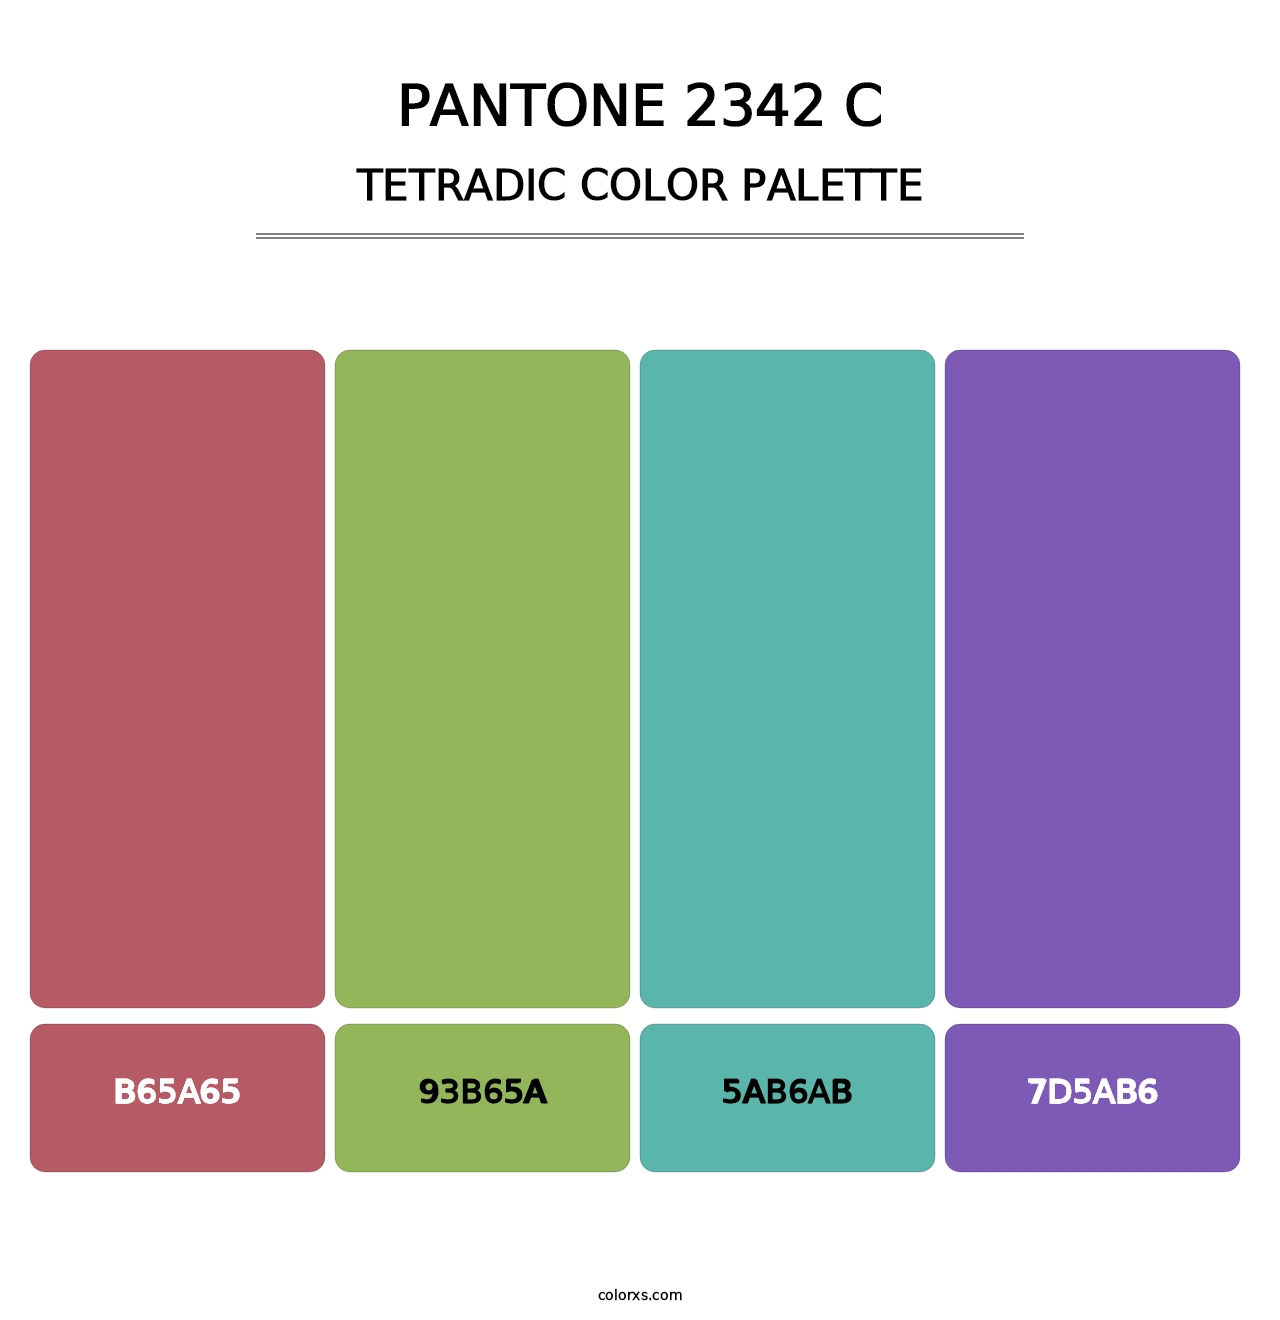 PANTONE 2342 C - Tetradic Color Palette